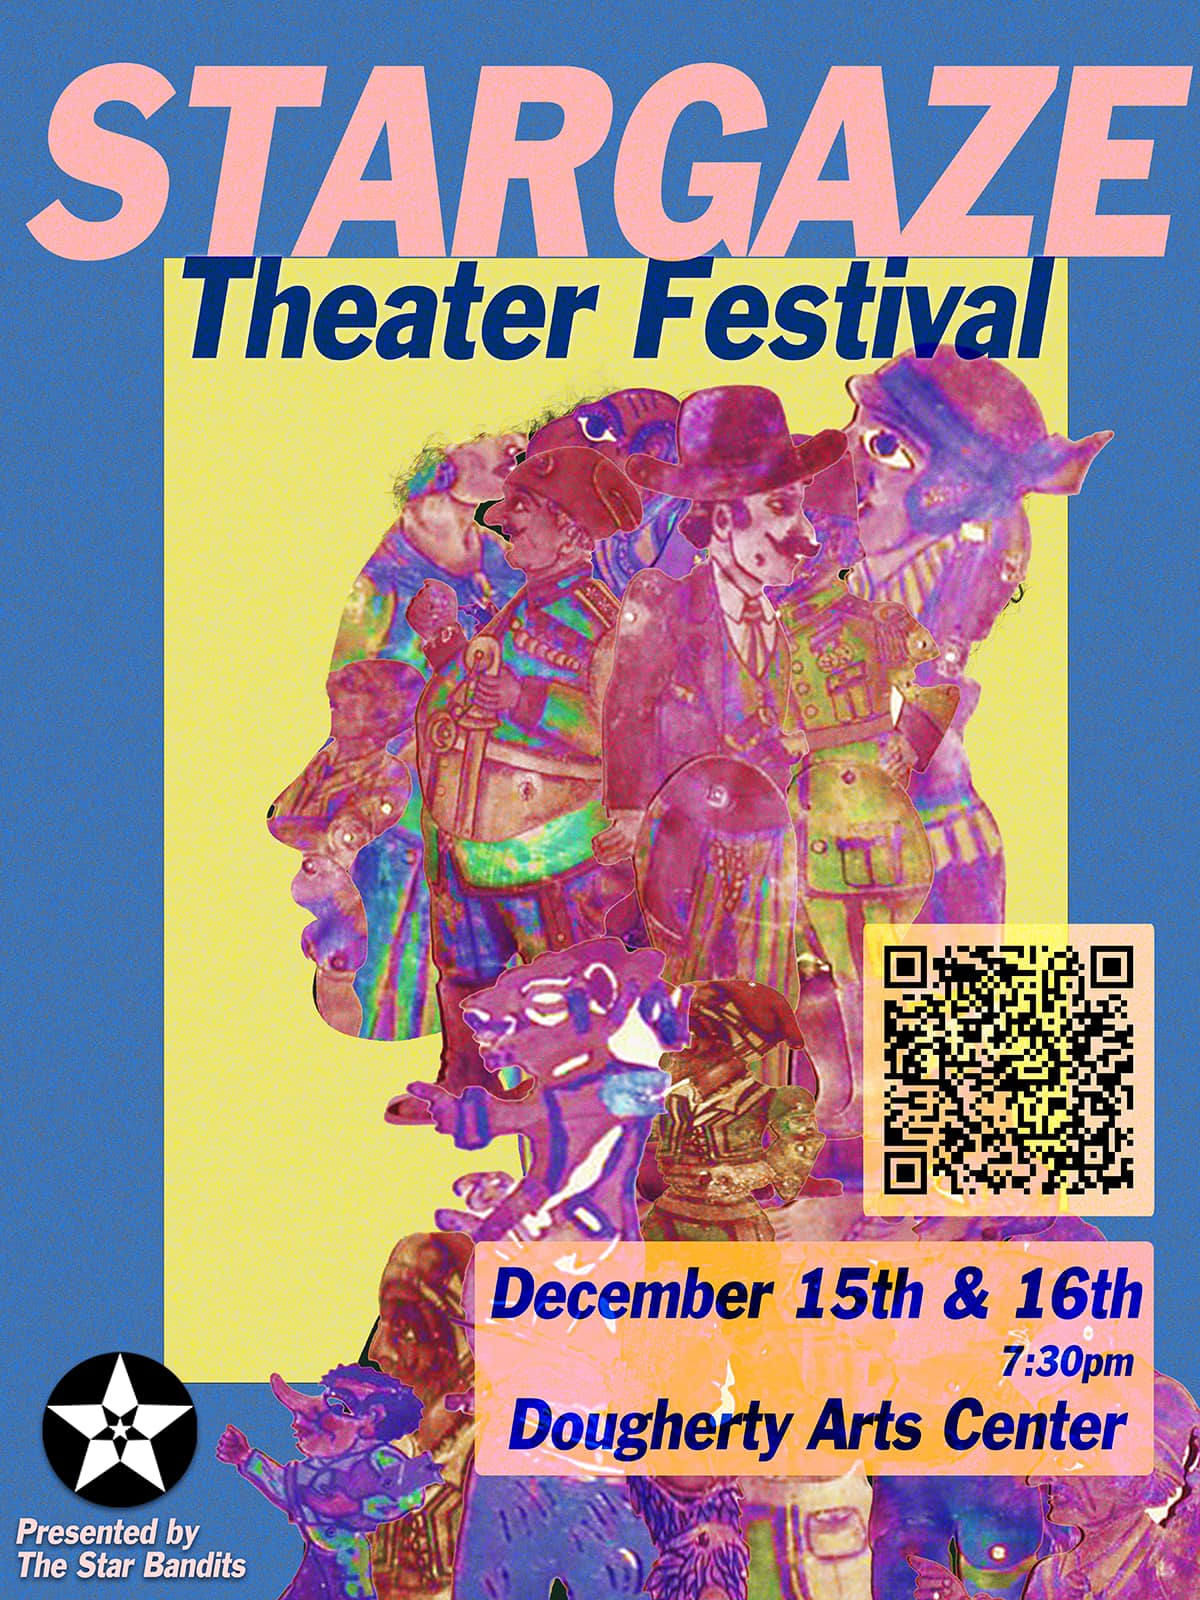 Stargaze Theatre Festival by Star Bandits